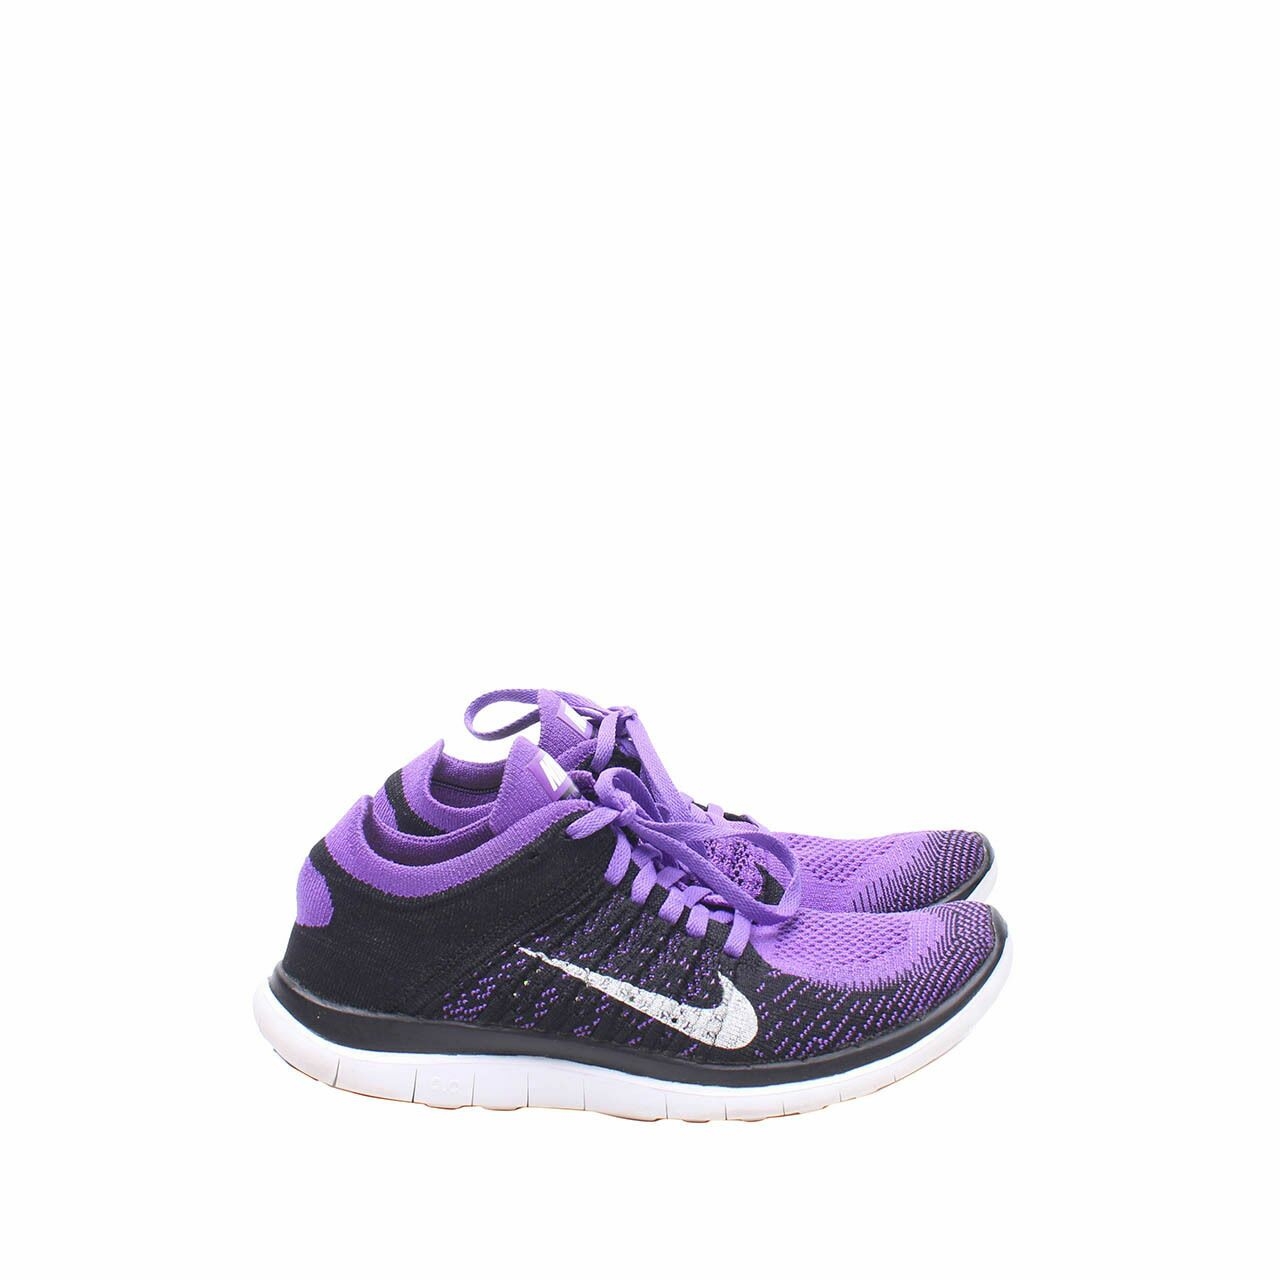 Nike Free 4.0 Flyknit Womens Size 10 Running Shoes White Grape Black